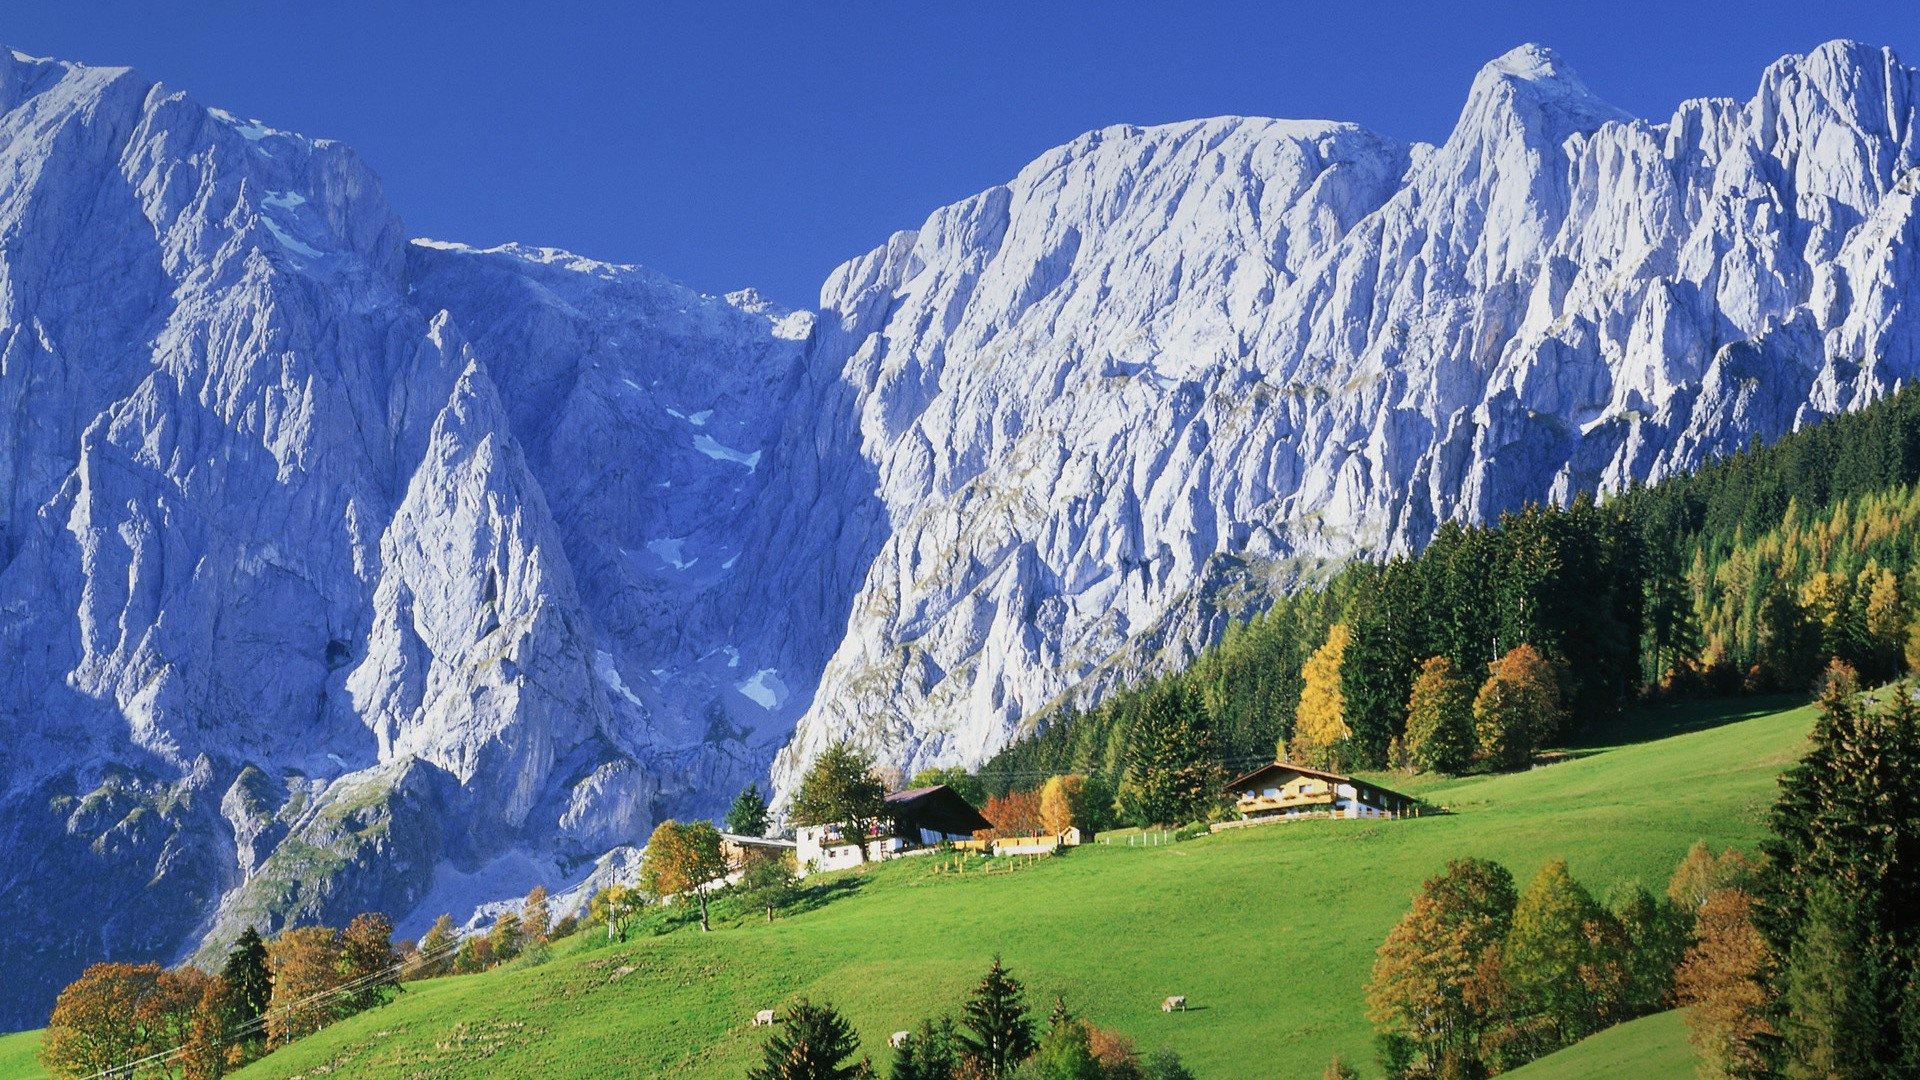 Hd Stuning Scenery in Austrian Alps Wallpaper Download Free